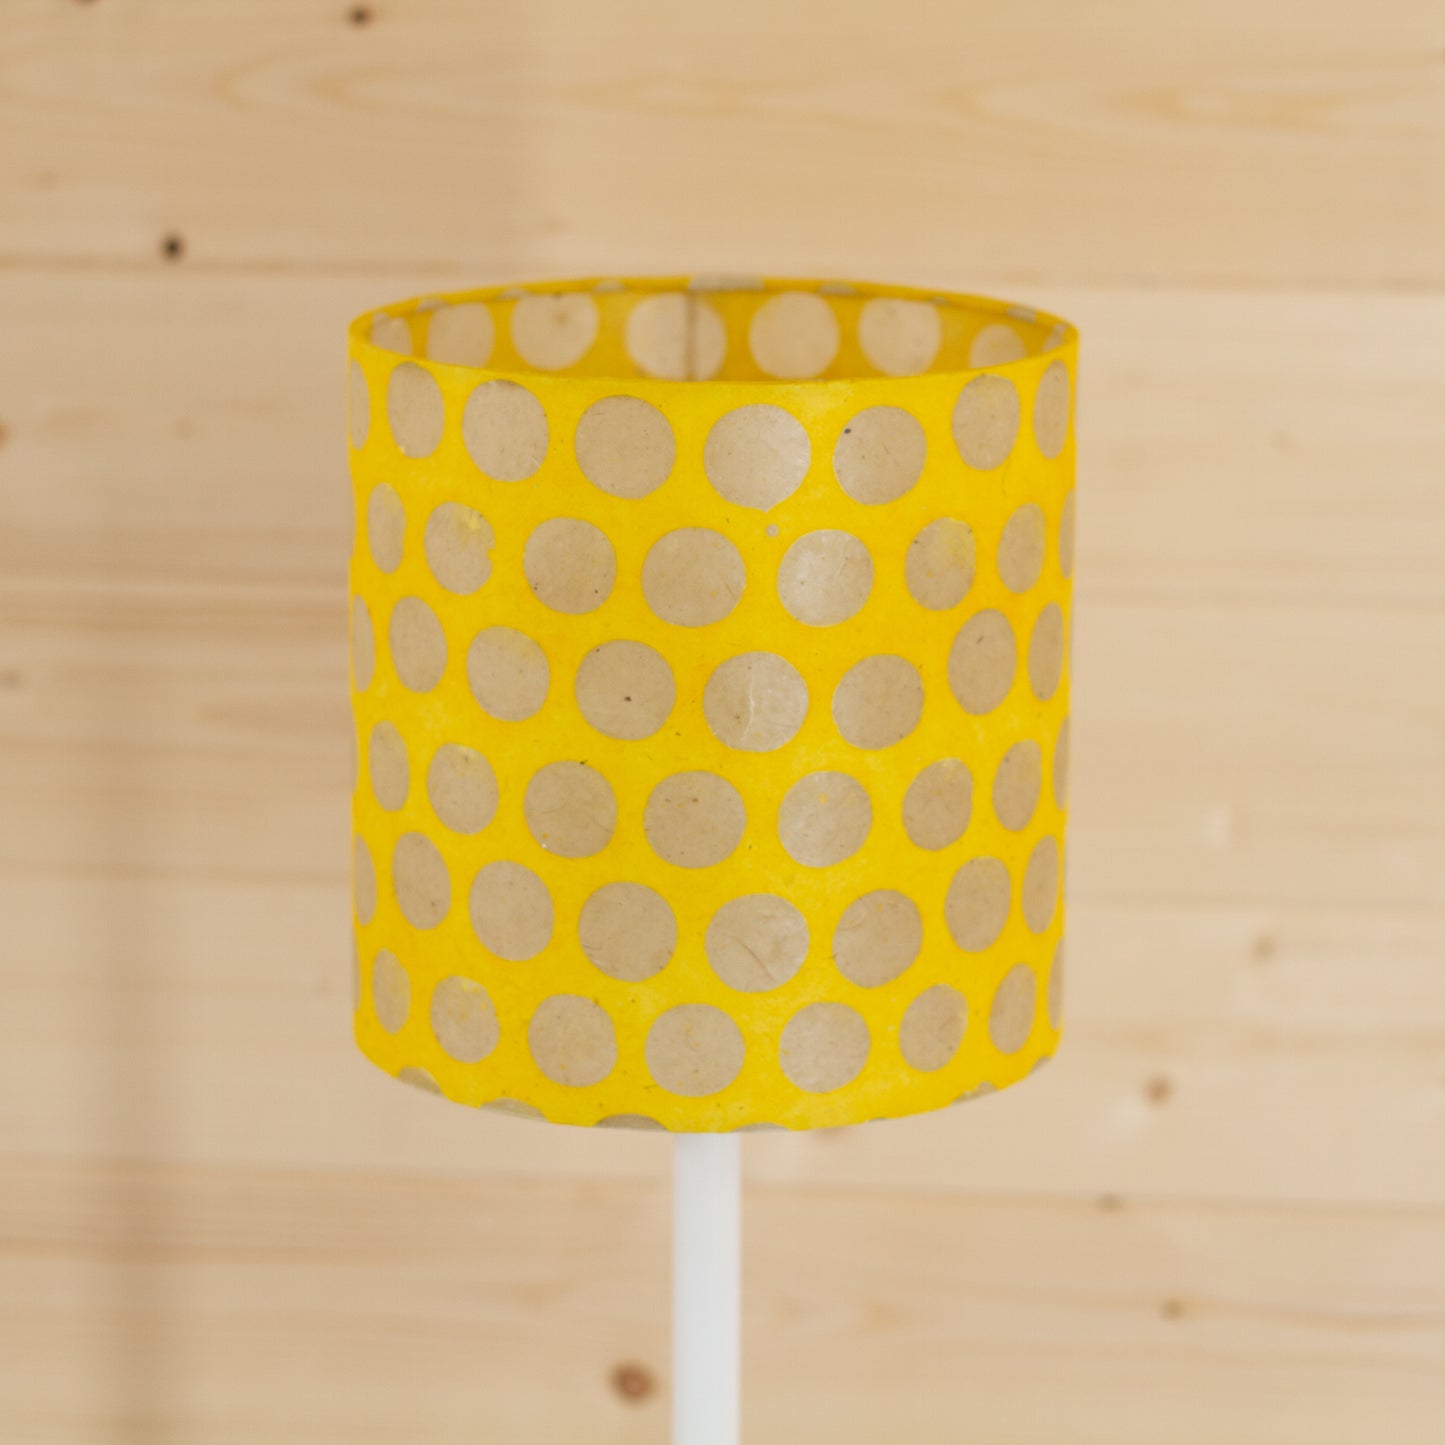 Drum Lamp Shade - P86 ~ Batik Dots on Yellow, 20cm(d) x 20cm(h)